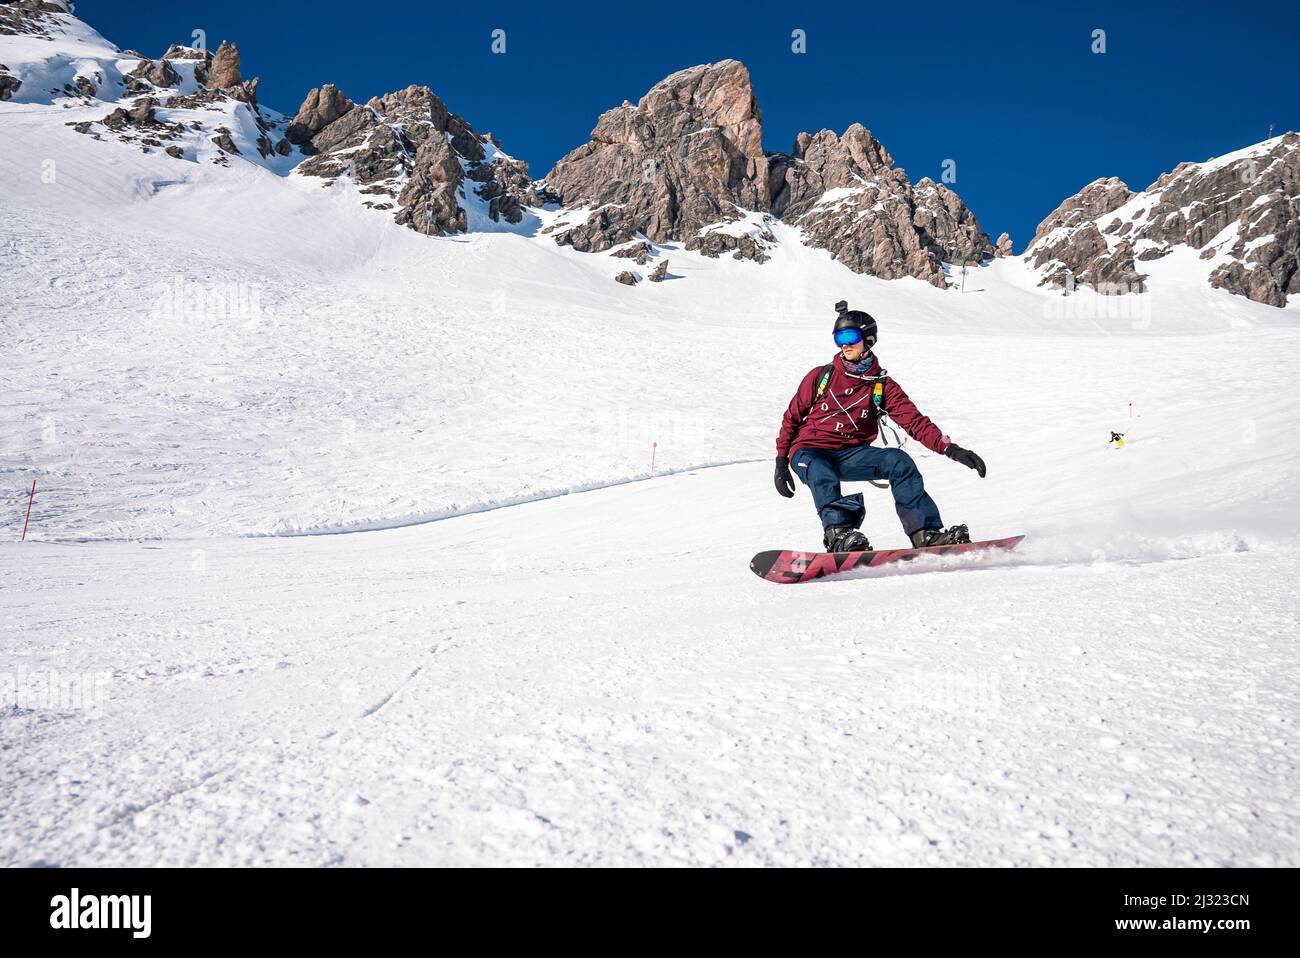 https://c8.alamy.com/comp/2J323CN/young-snowboarder-sliding-down-snowy-slope-on-mountain-at-winter-resort-2J323CN.jpg